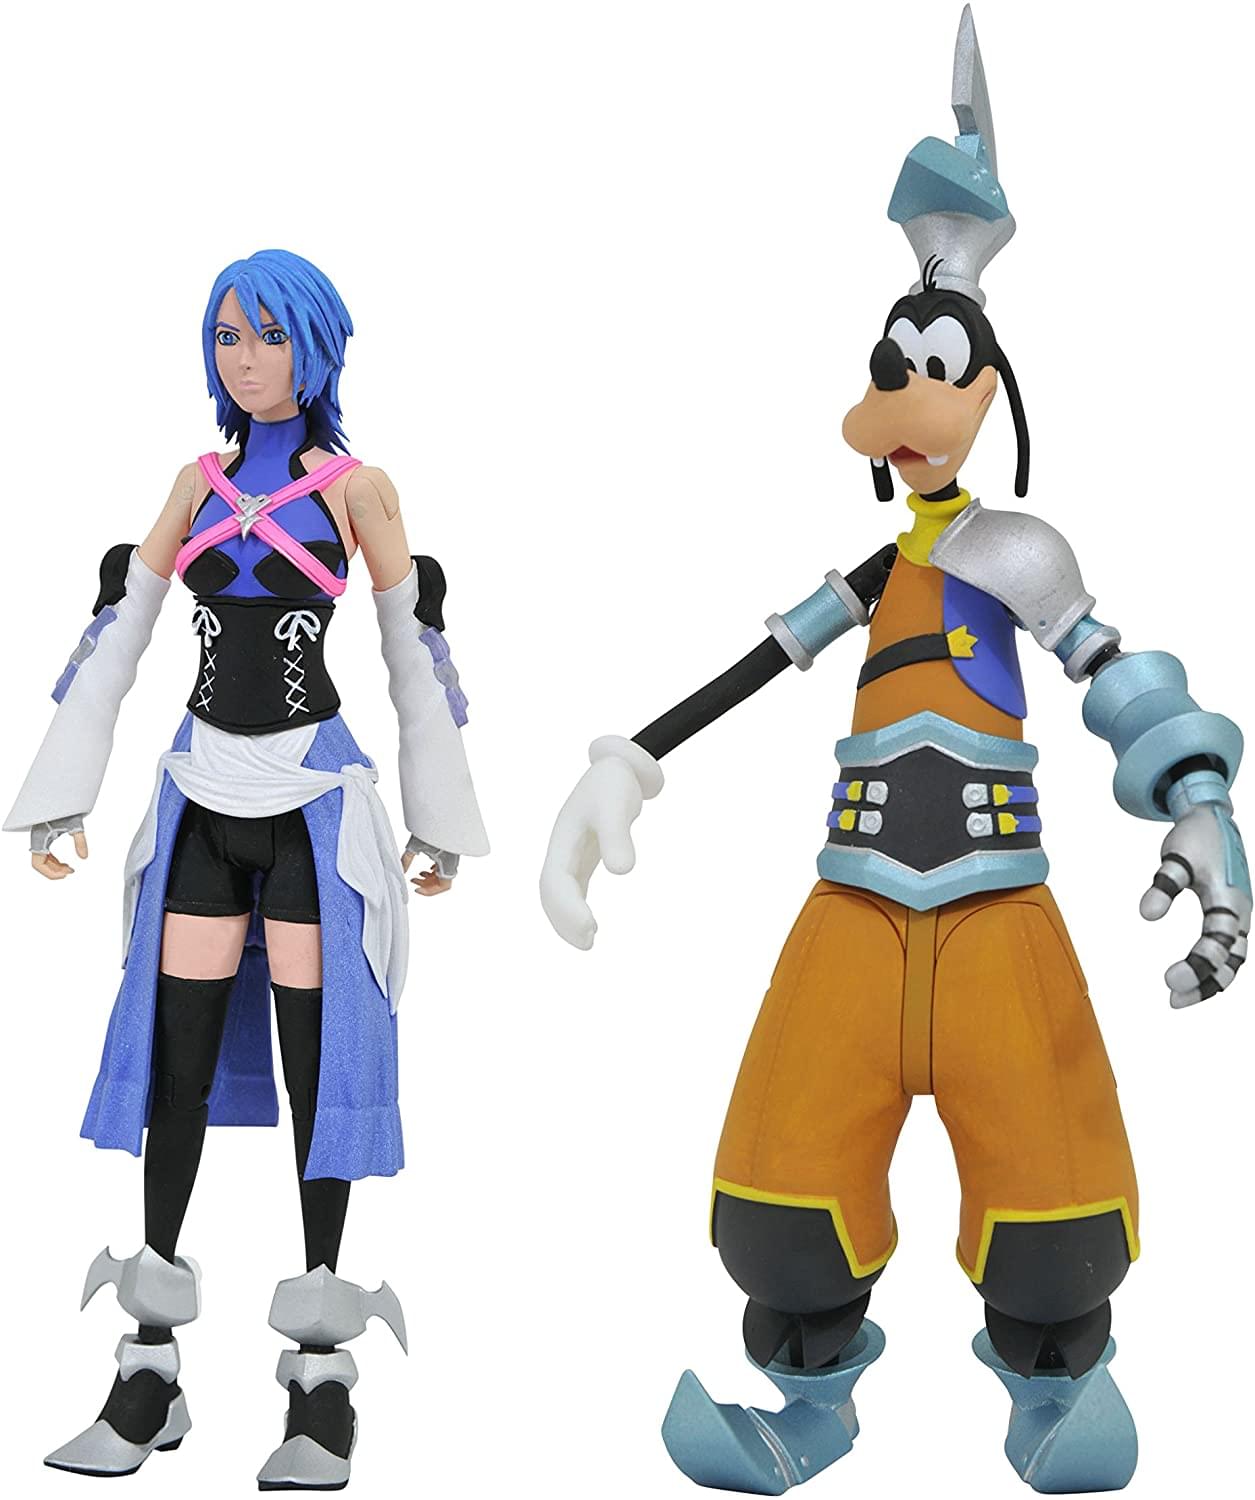 Disney Kingdom Hearts Series 2 Select: Aqua & Goofy 2-Pack